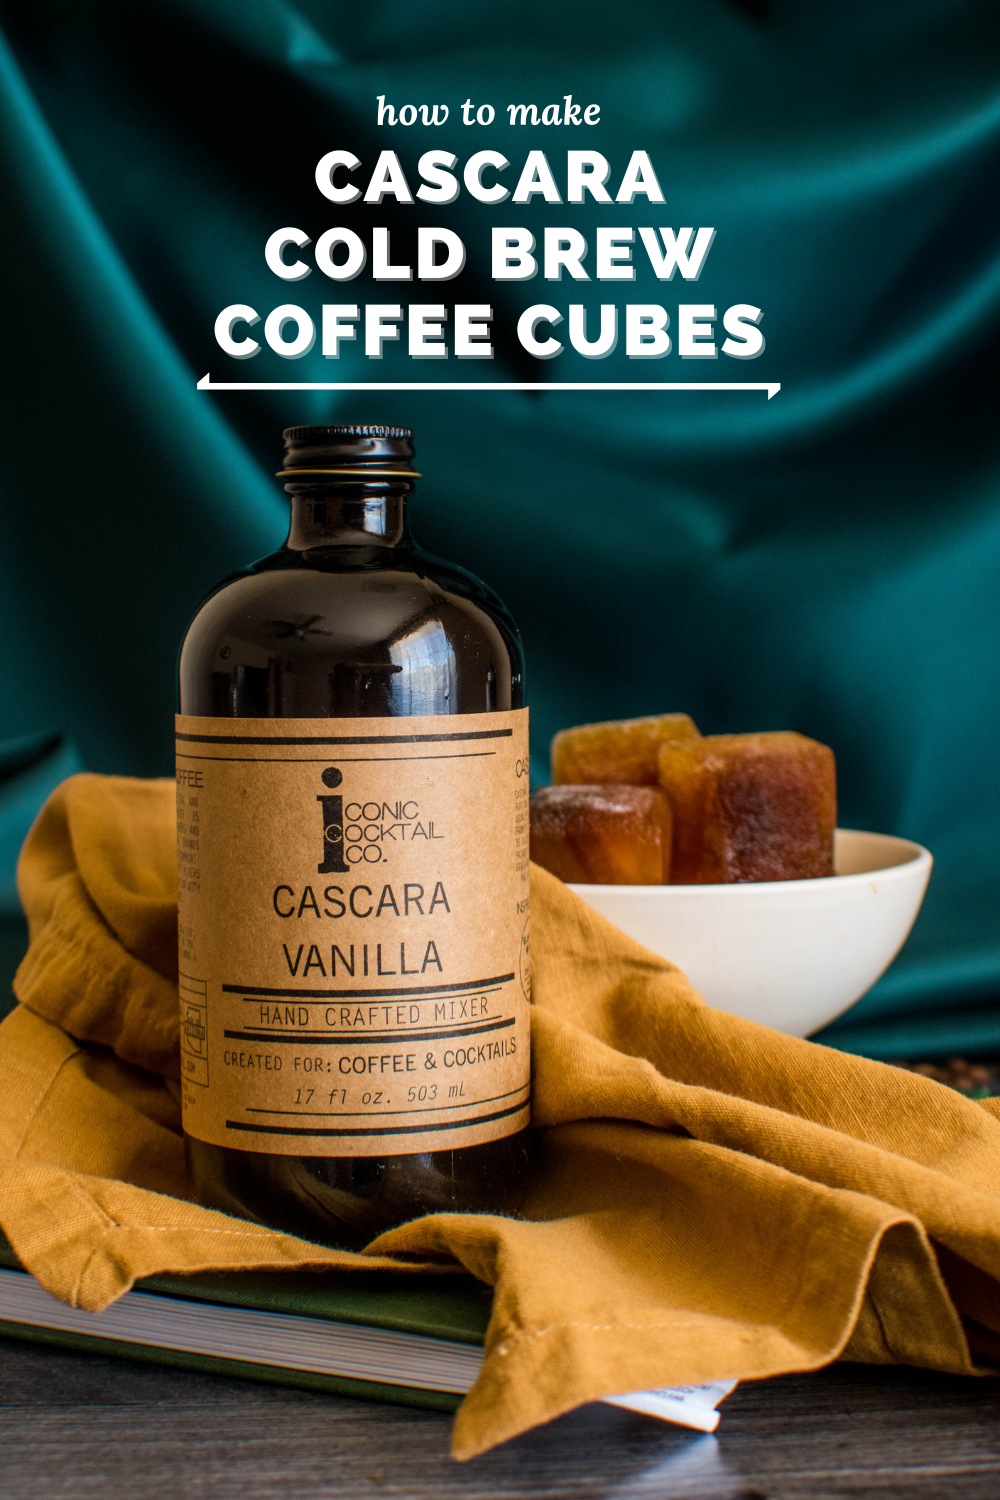 How to Make Cascara Vanilla Coffee Cubes